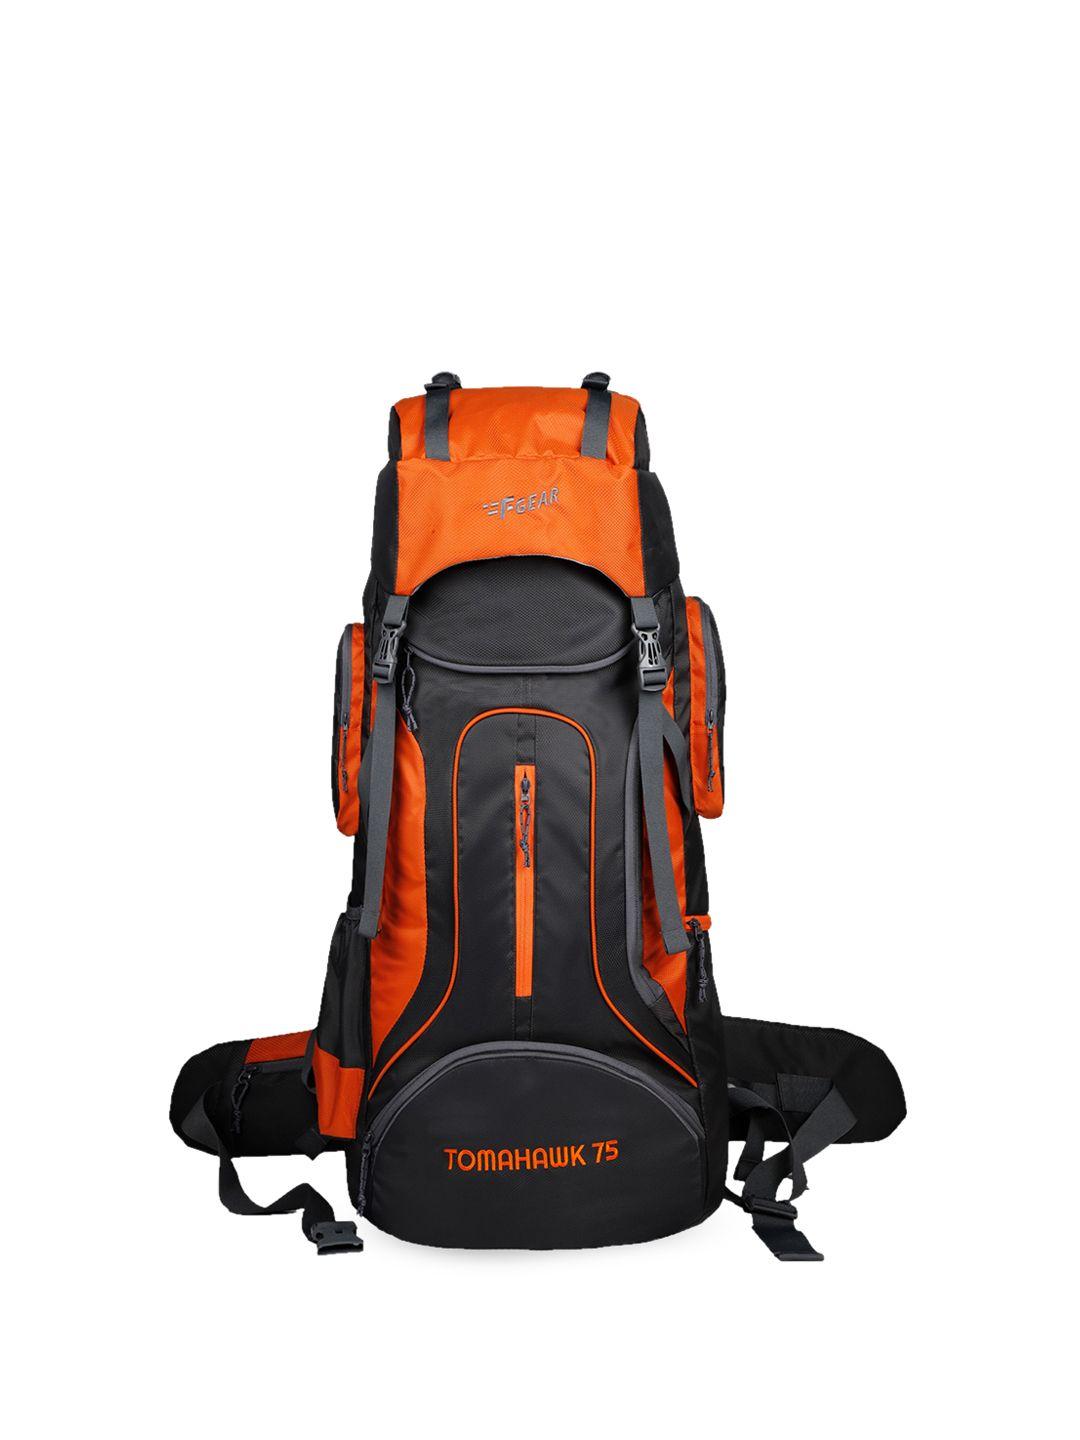 f gear colourblocked rucksack with rain cover-75l